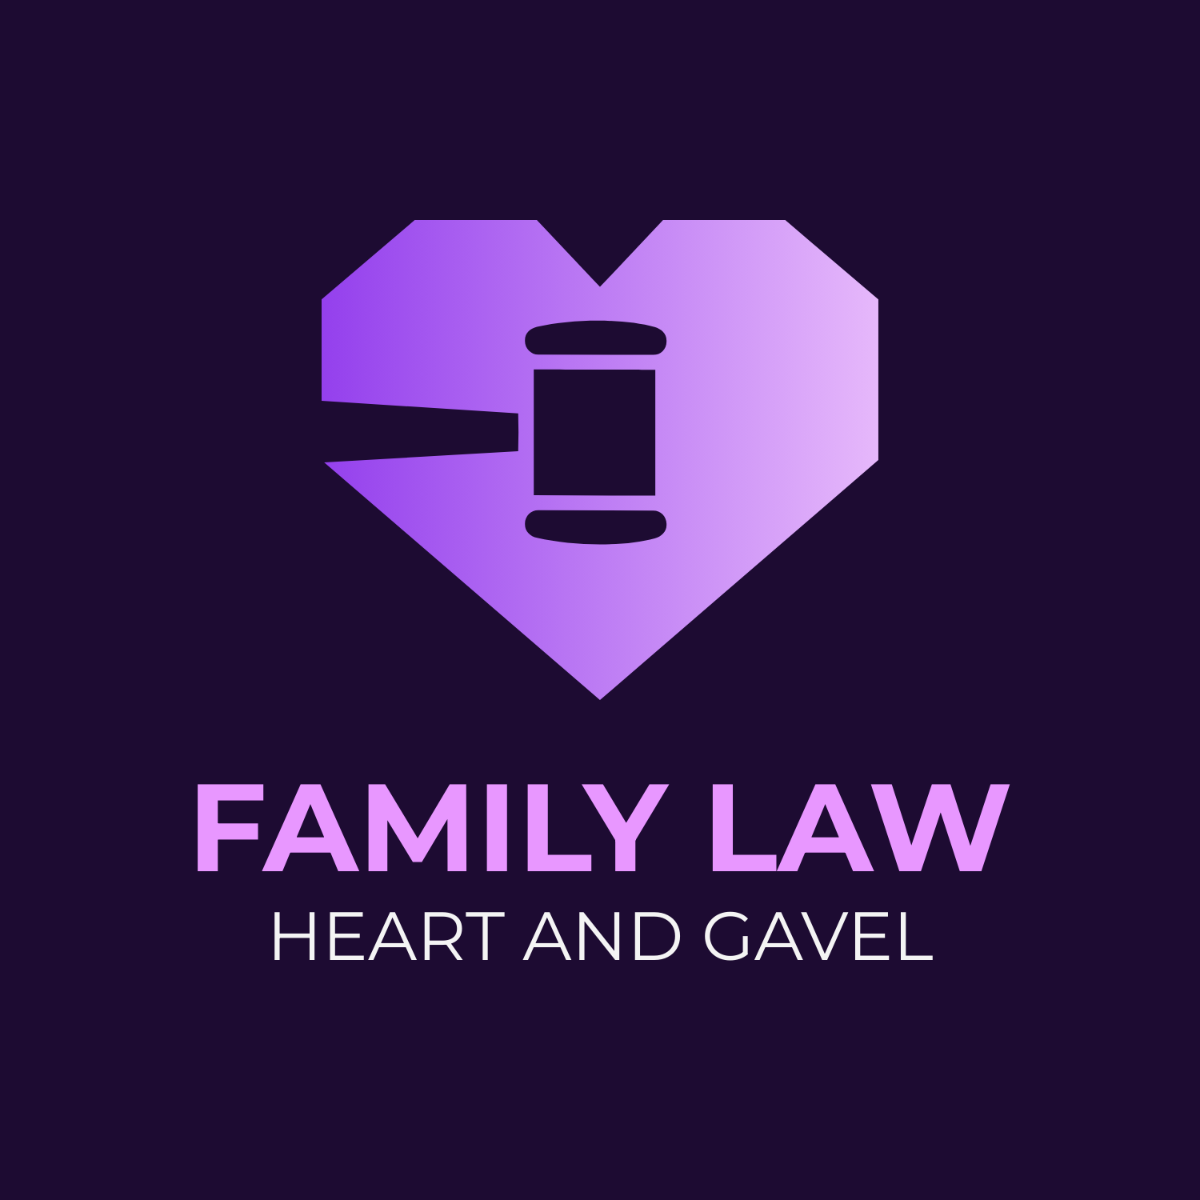 Family Law Heart and Gavel Logo